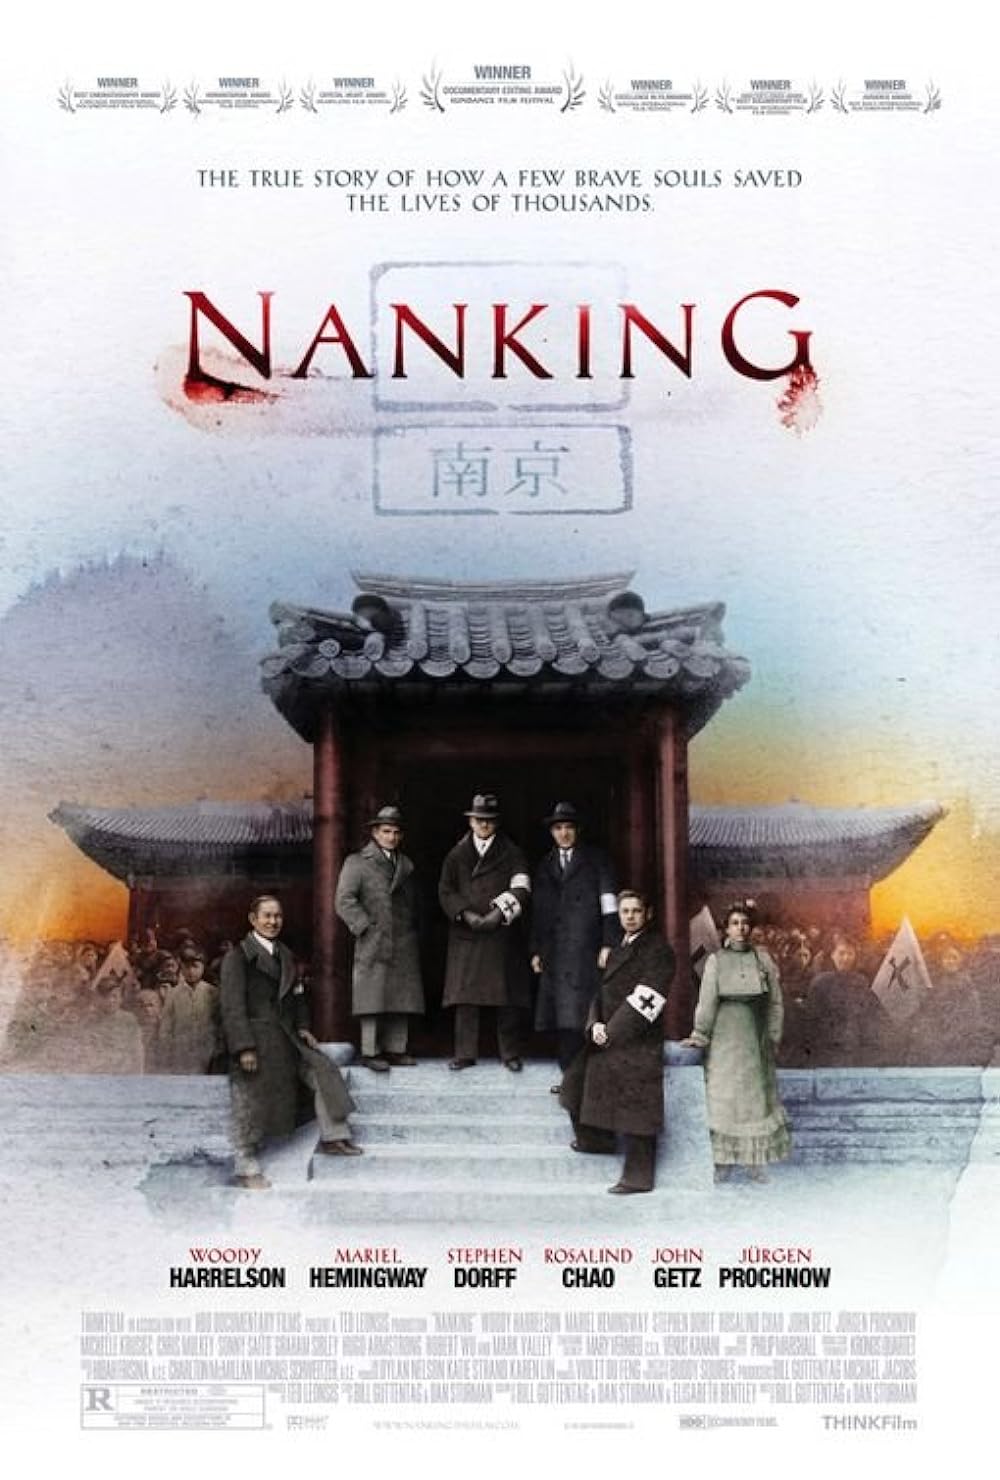 Nonton Film Nanking Sub Indo SLOTPANAS99